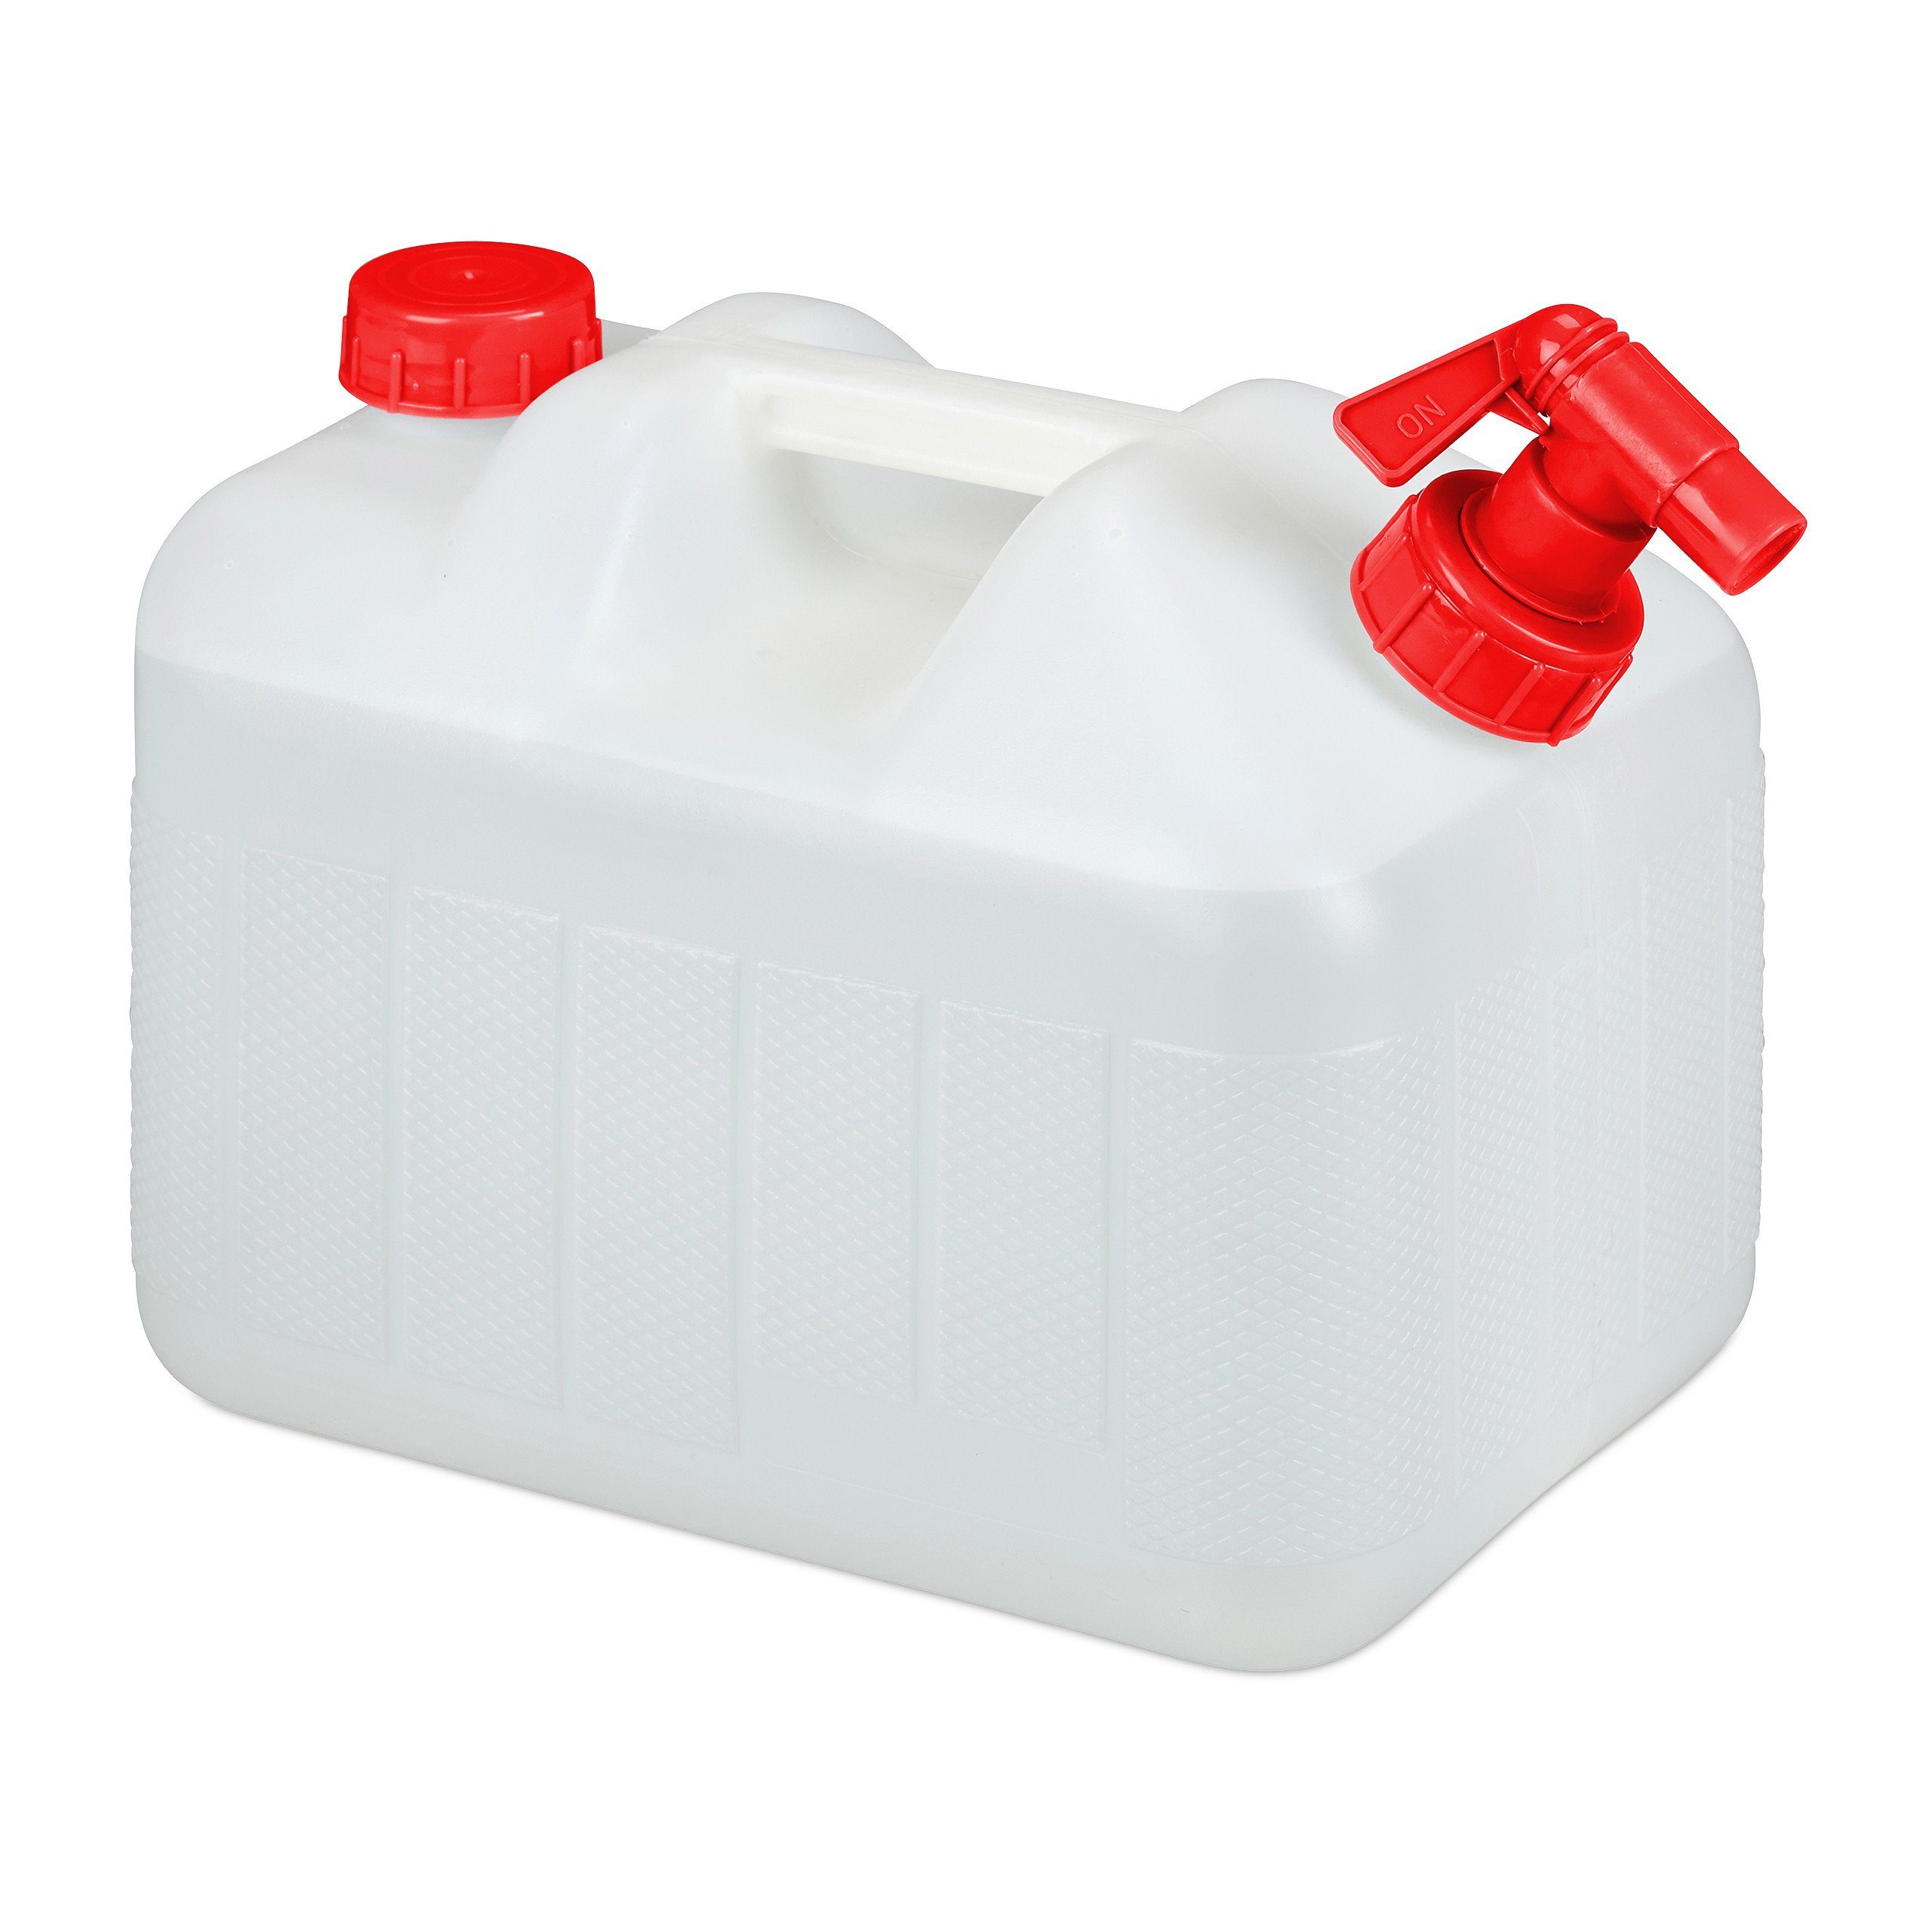 relaxdays Kanister Wasserkanister mit Hahn, 10 Liter